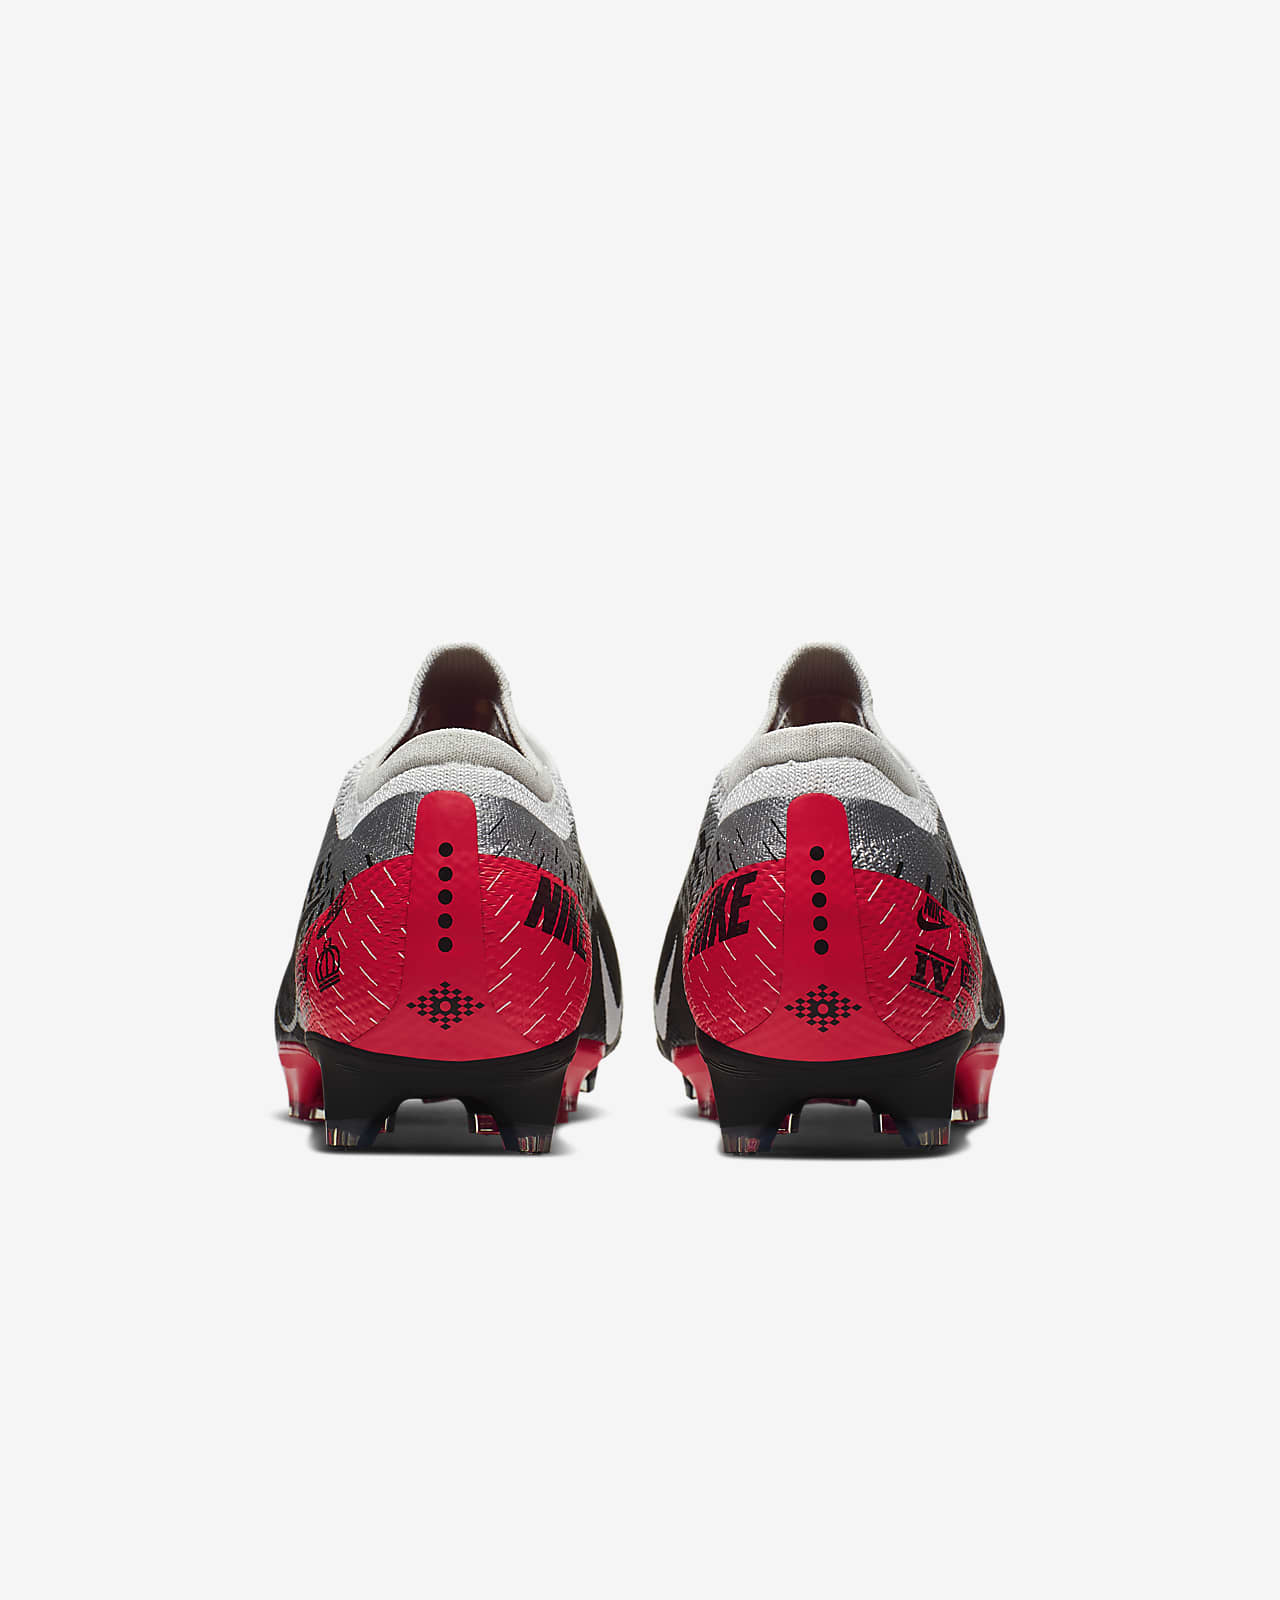 Speciaal Stoffig referentie Nike Mercurial Vapor 13 Pro Neymar Jr. FG Firm-Ground Football Boots. Nike  NO